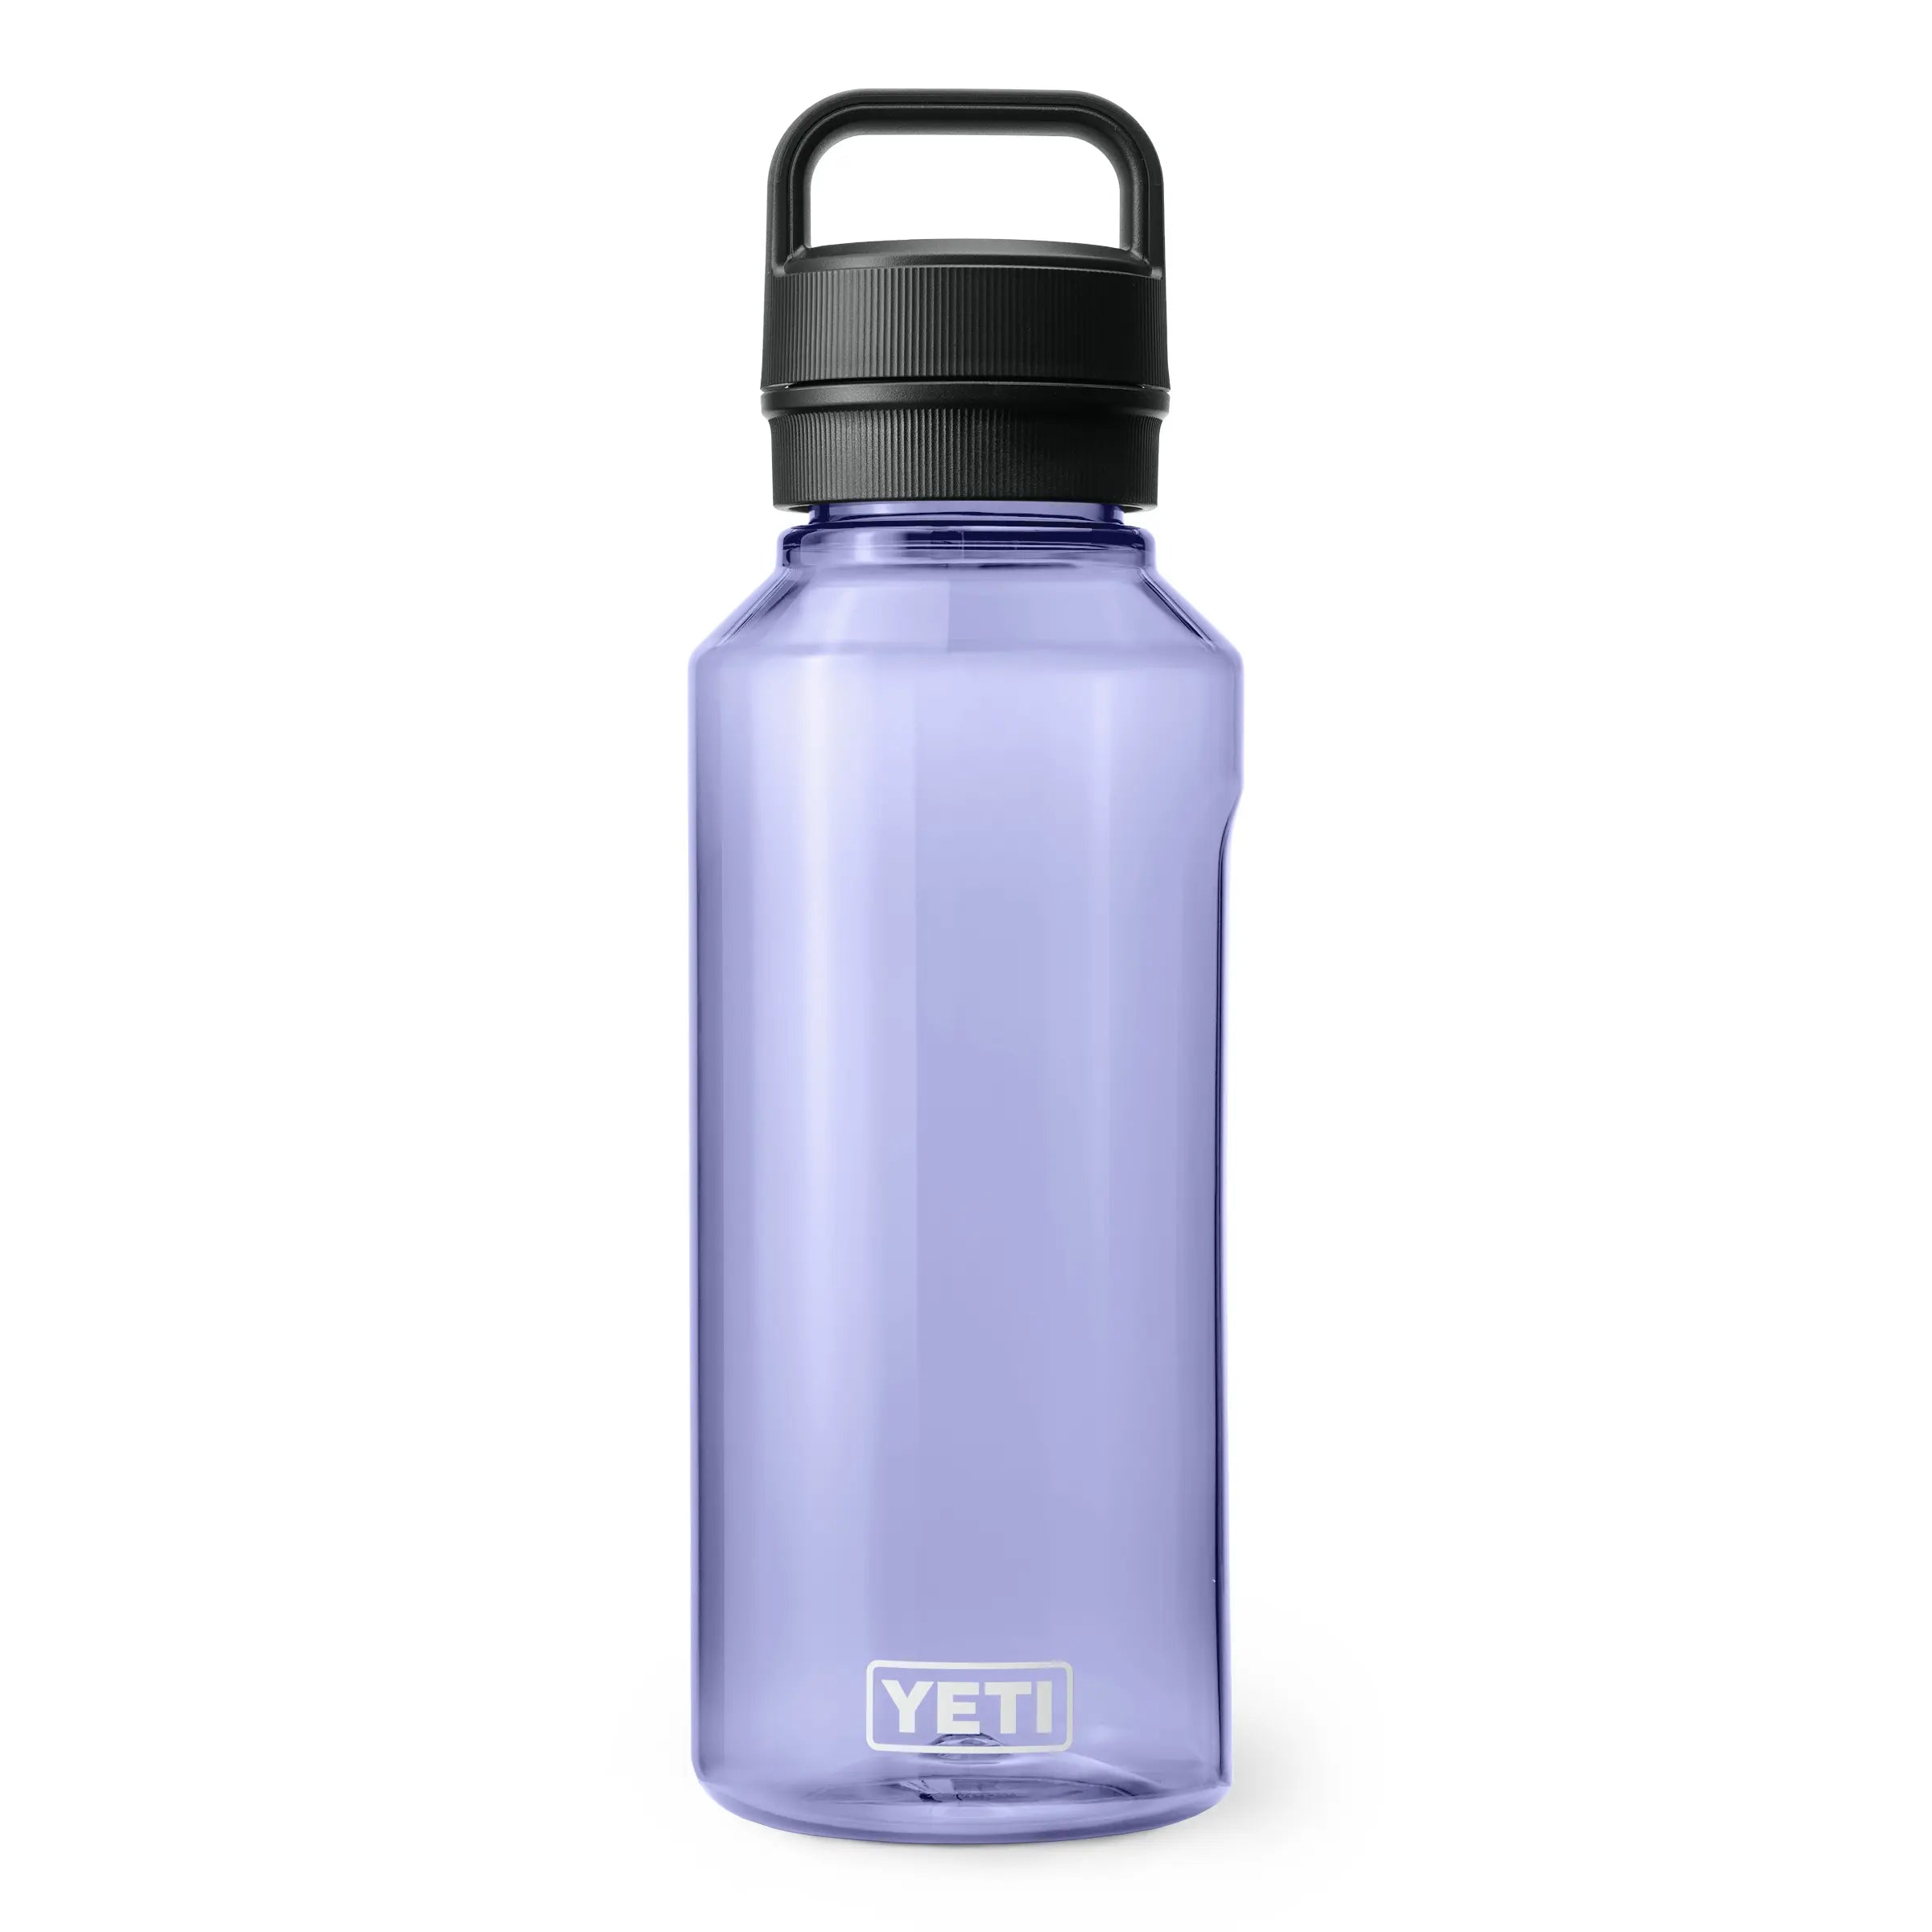 A lilac purple YETI Yonder Bottle 50 oz water bottle.